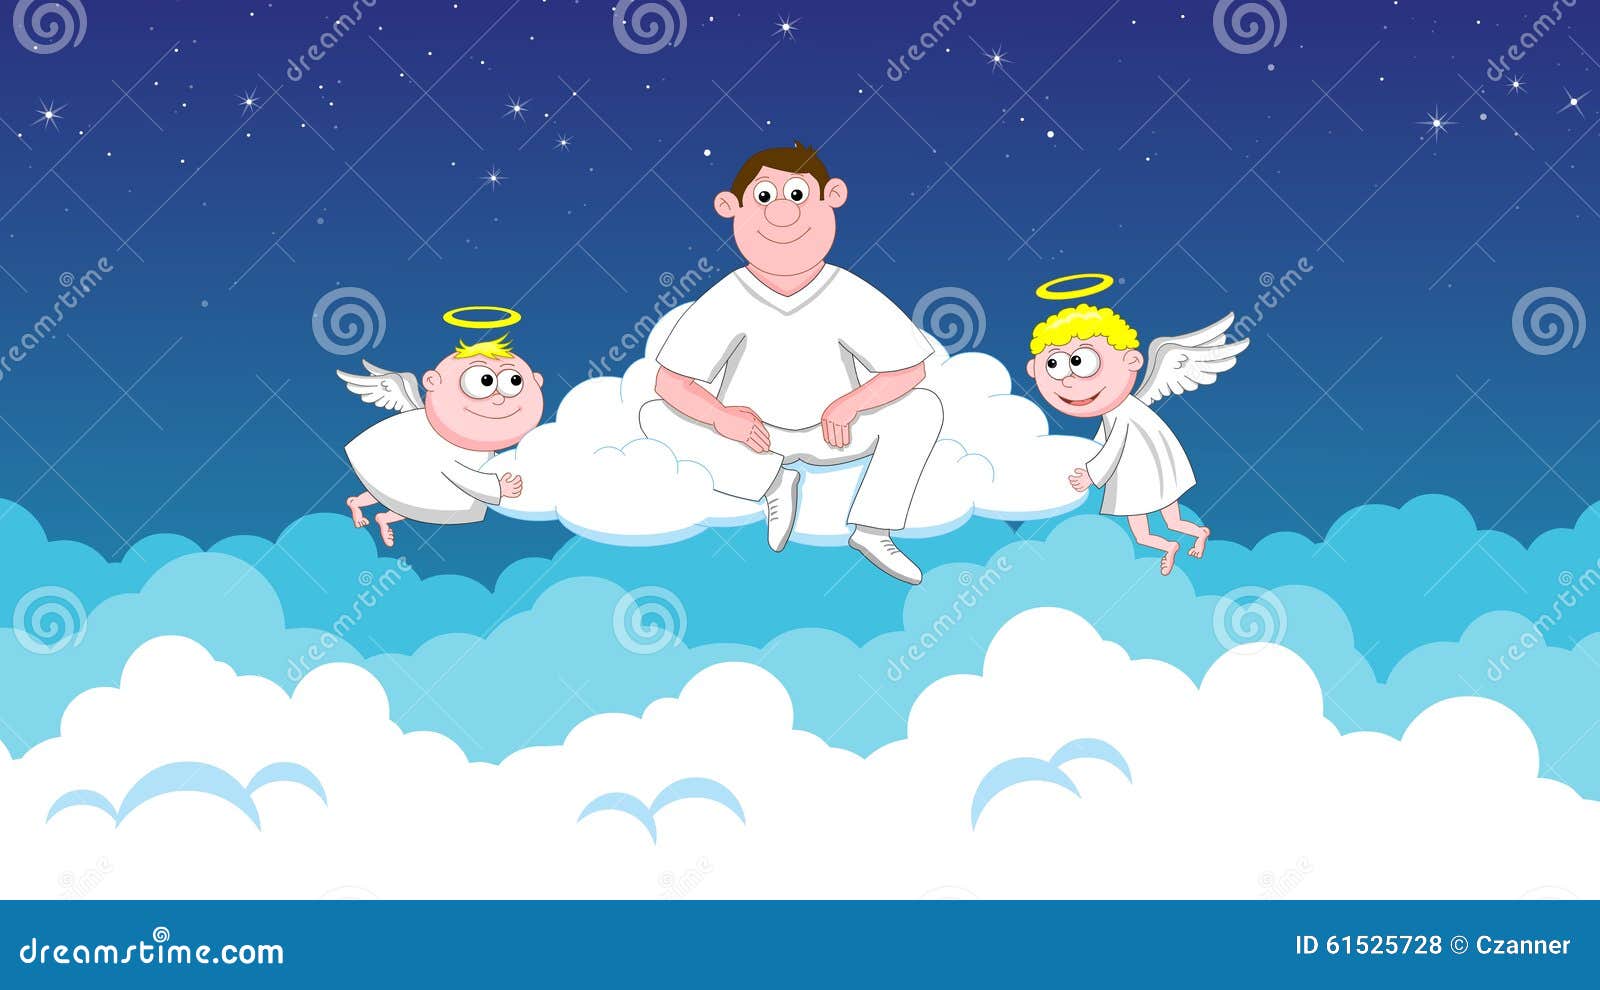 Angels in heaven stock illustration. Illustration of flying - 61525728